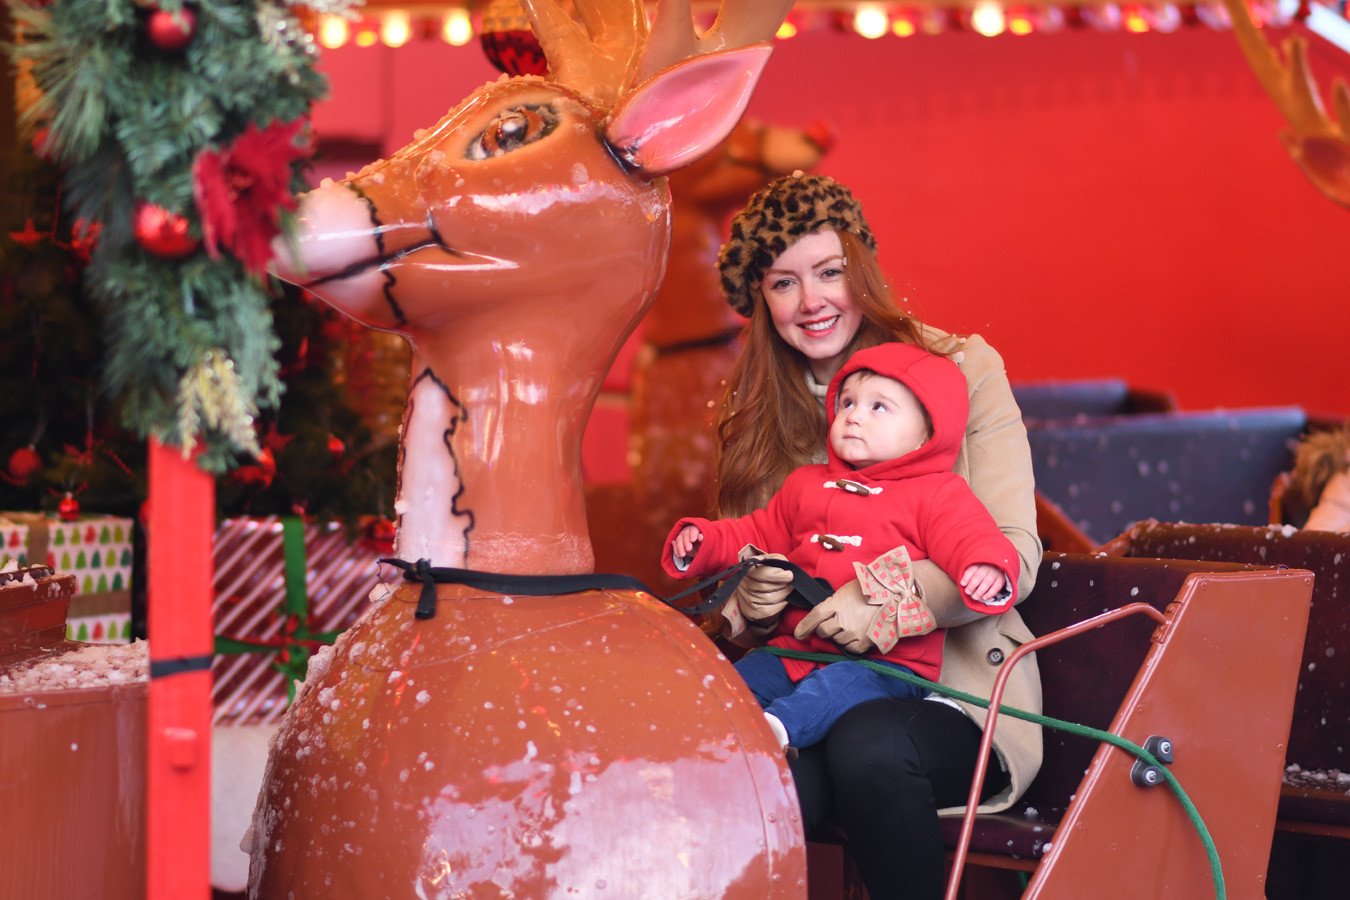 On the reindeer ride at Edinburgh Christmas market